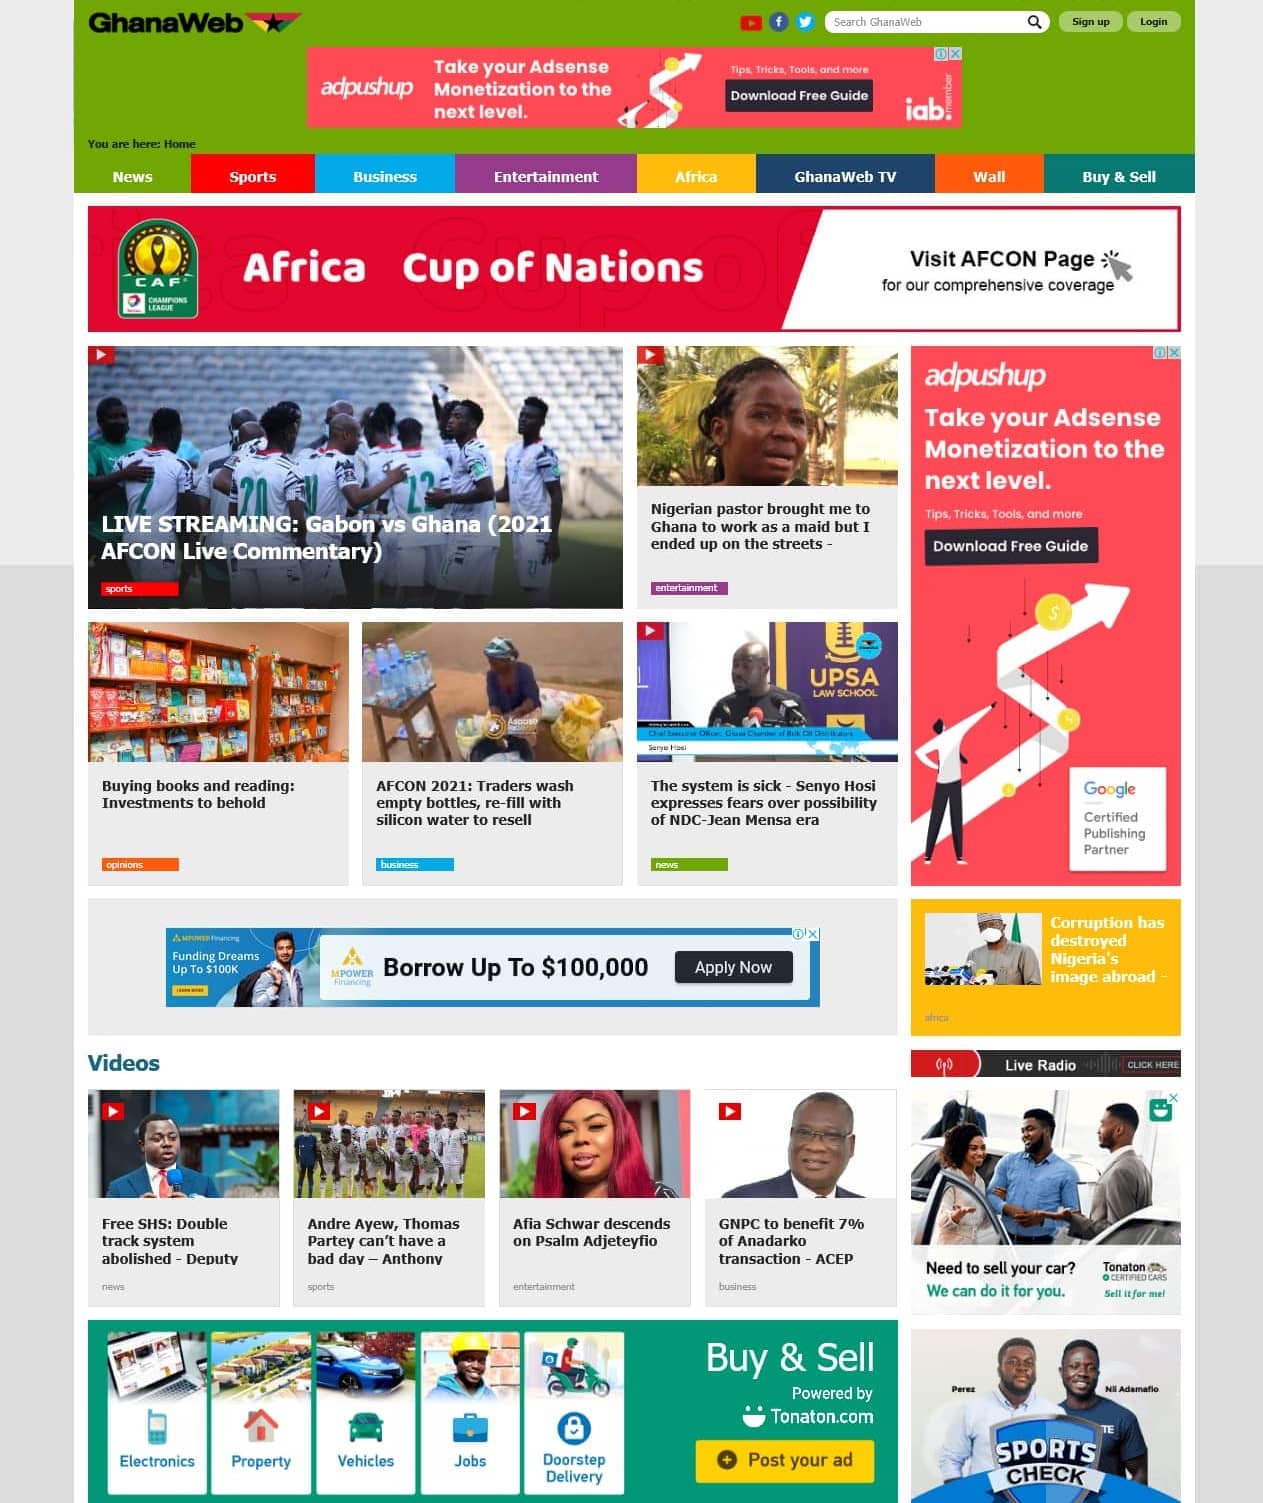 Ghana Web Vertical Portal Best Ghana News Blogs Best Blogs & Websites in Ghana You Should Follow